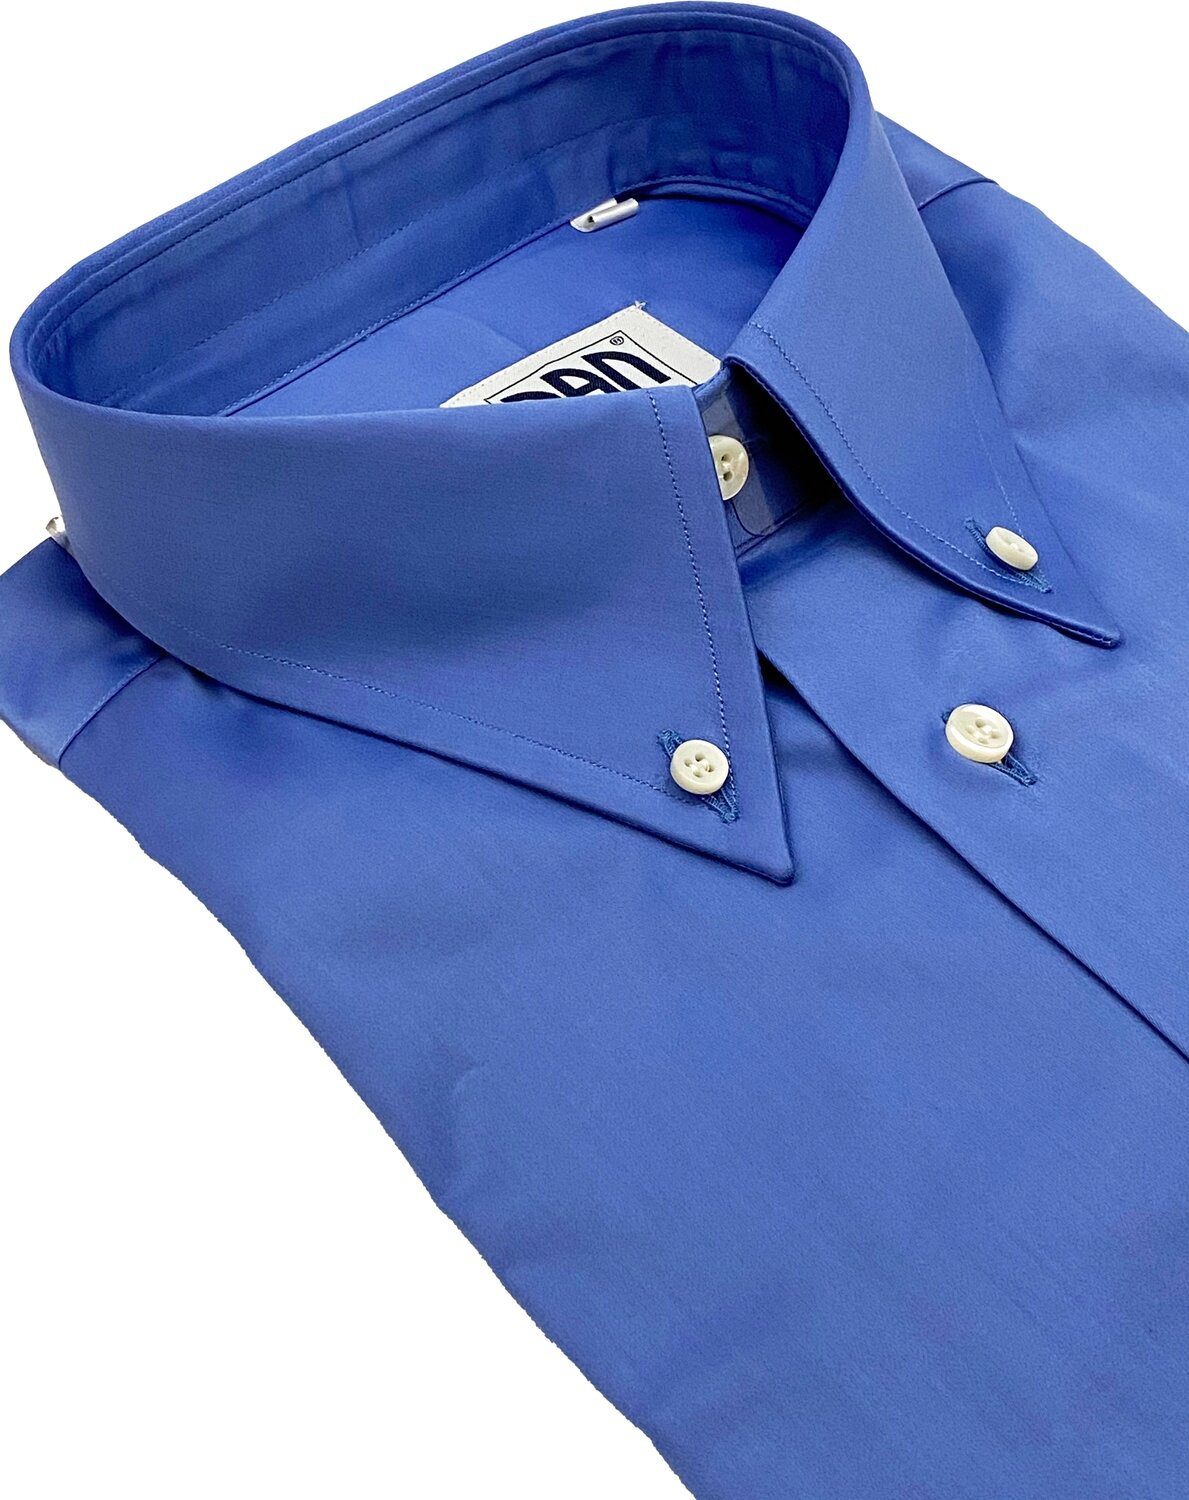 Exclusive shirt 100% Cotton namur azzurro sport